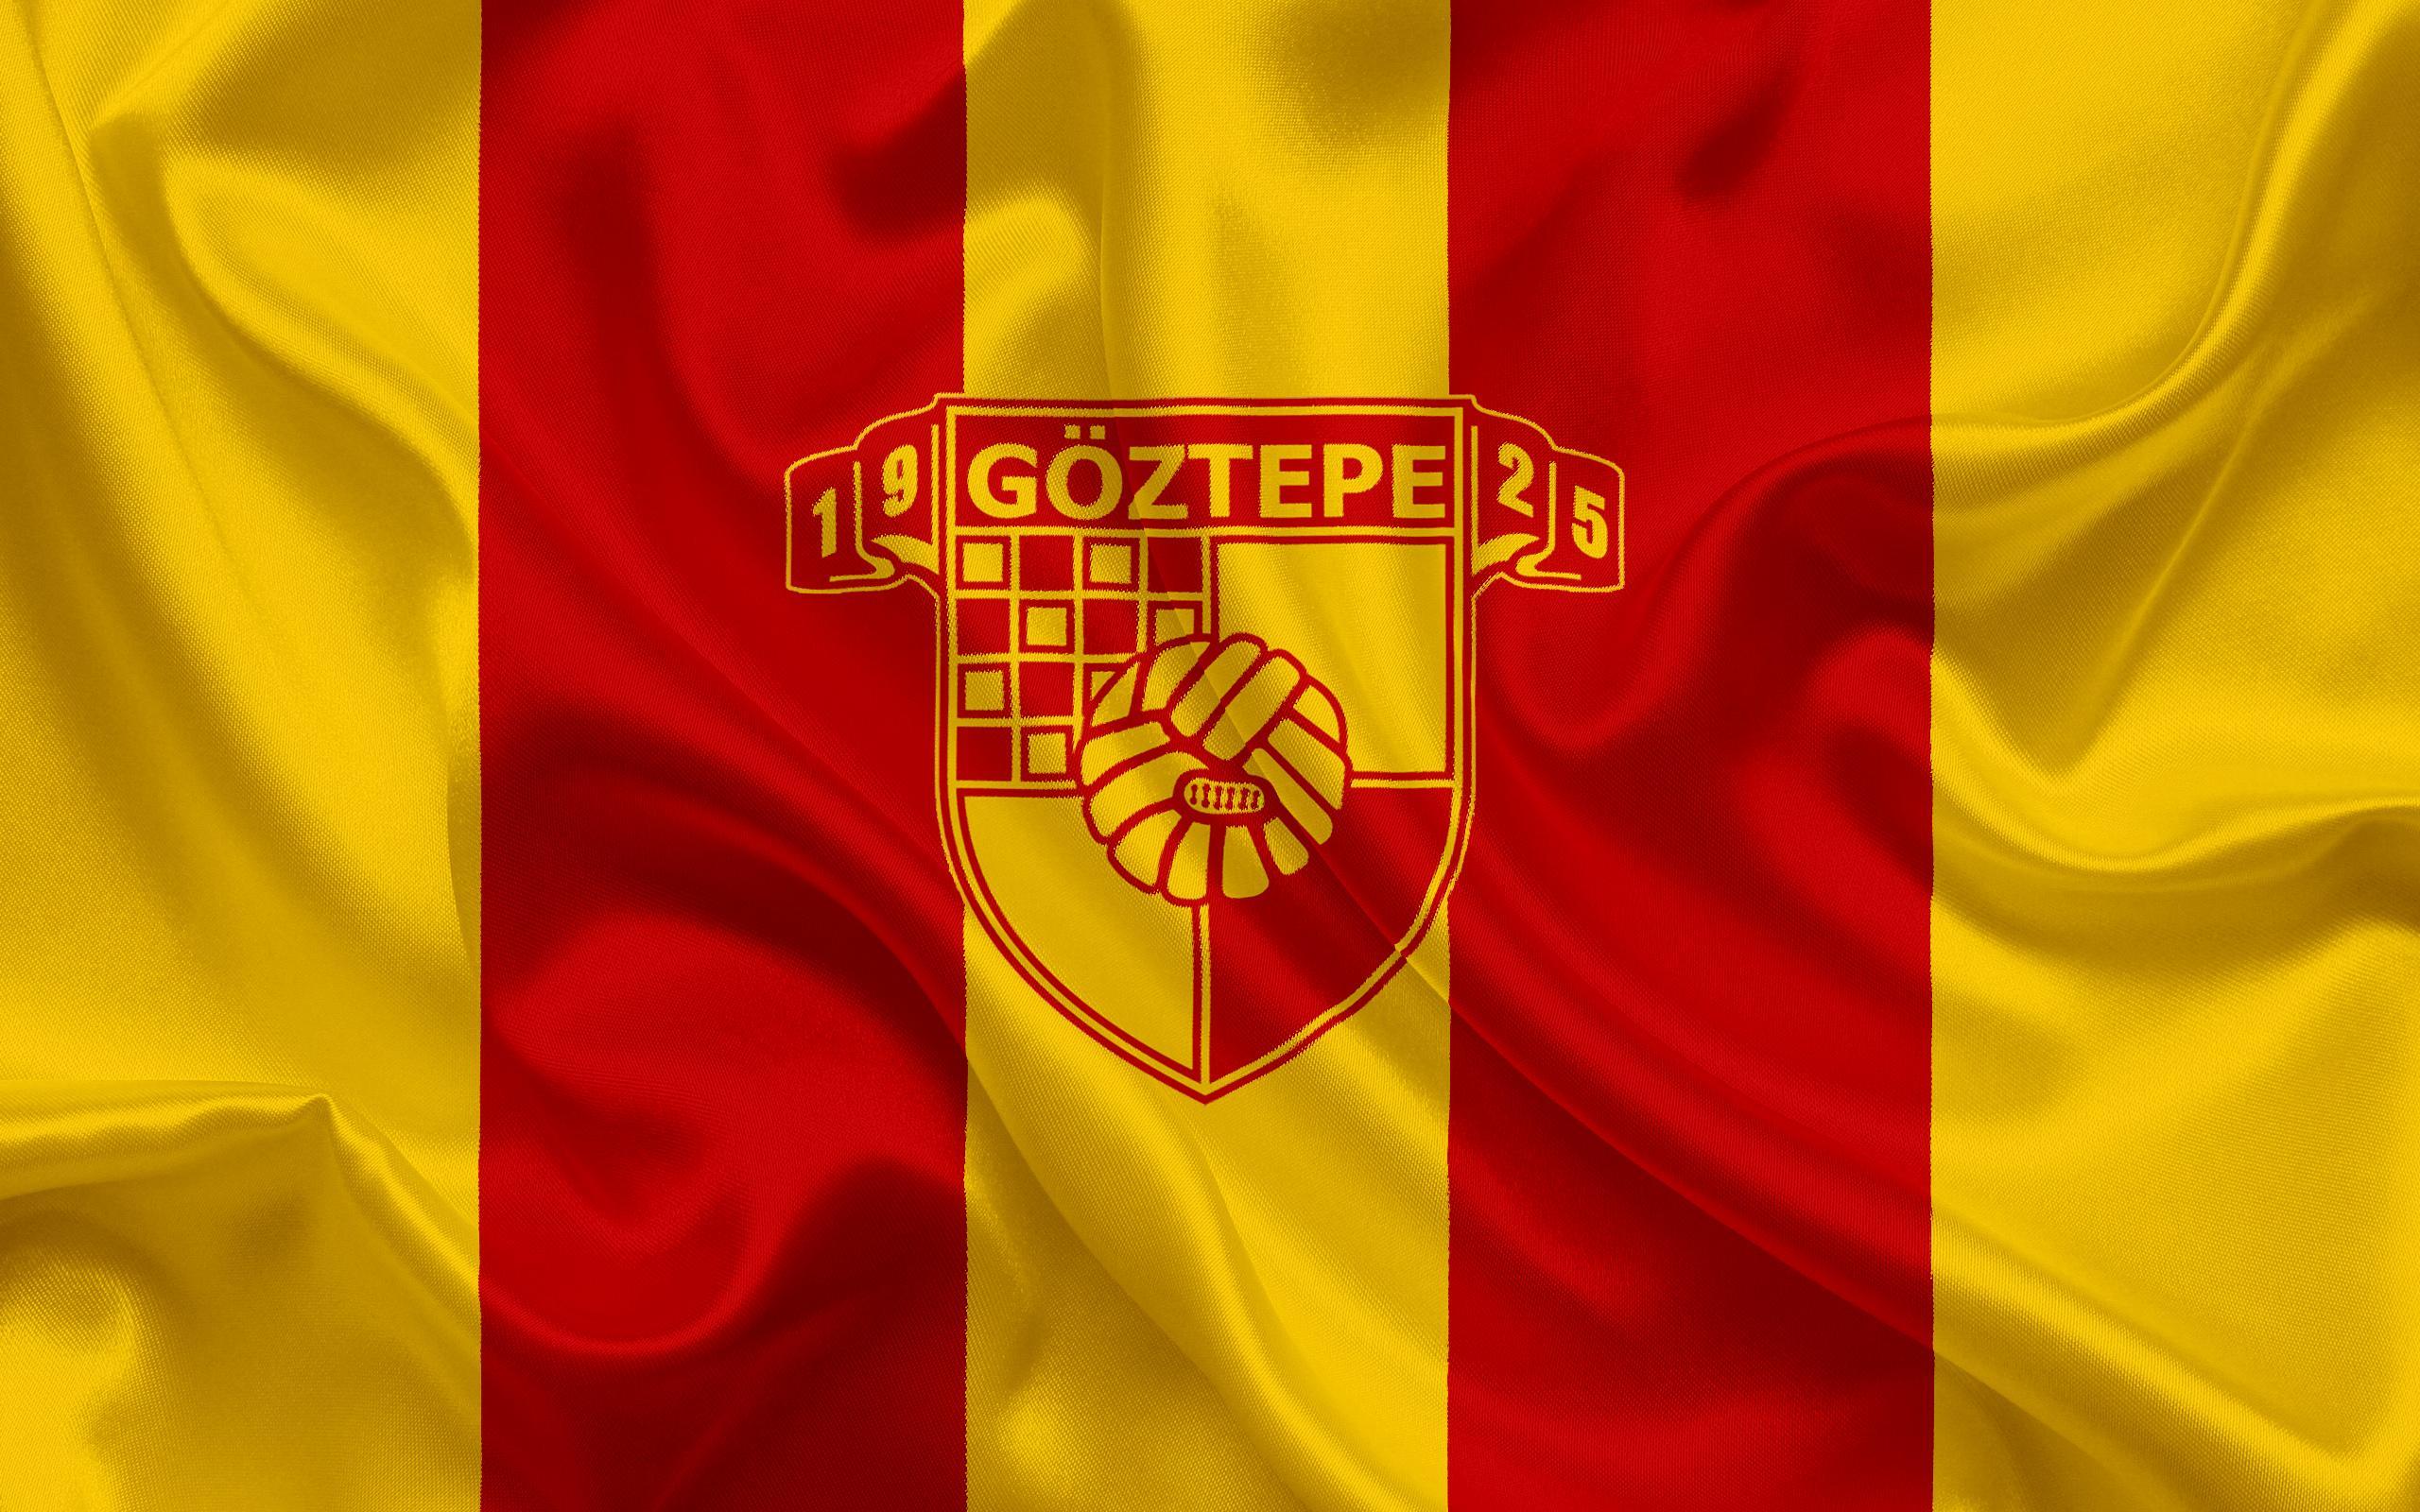 Download wallpaper Göztepe SK, Turkish football club, emblem, logo